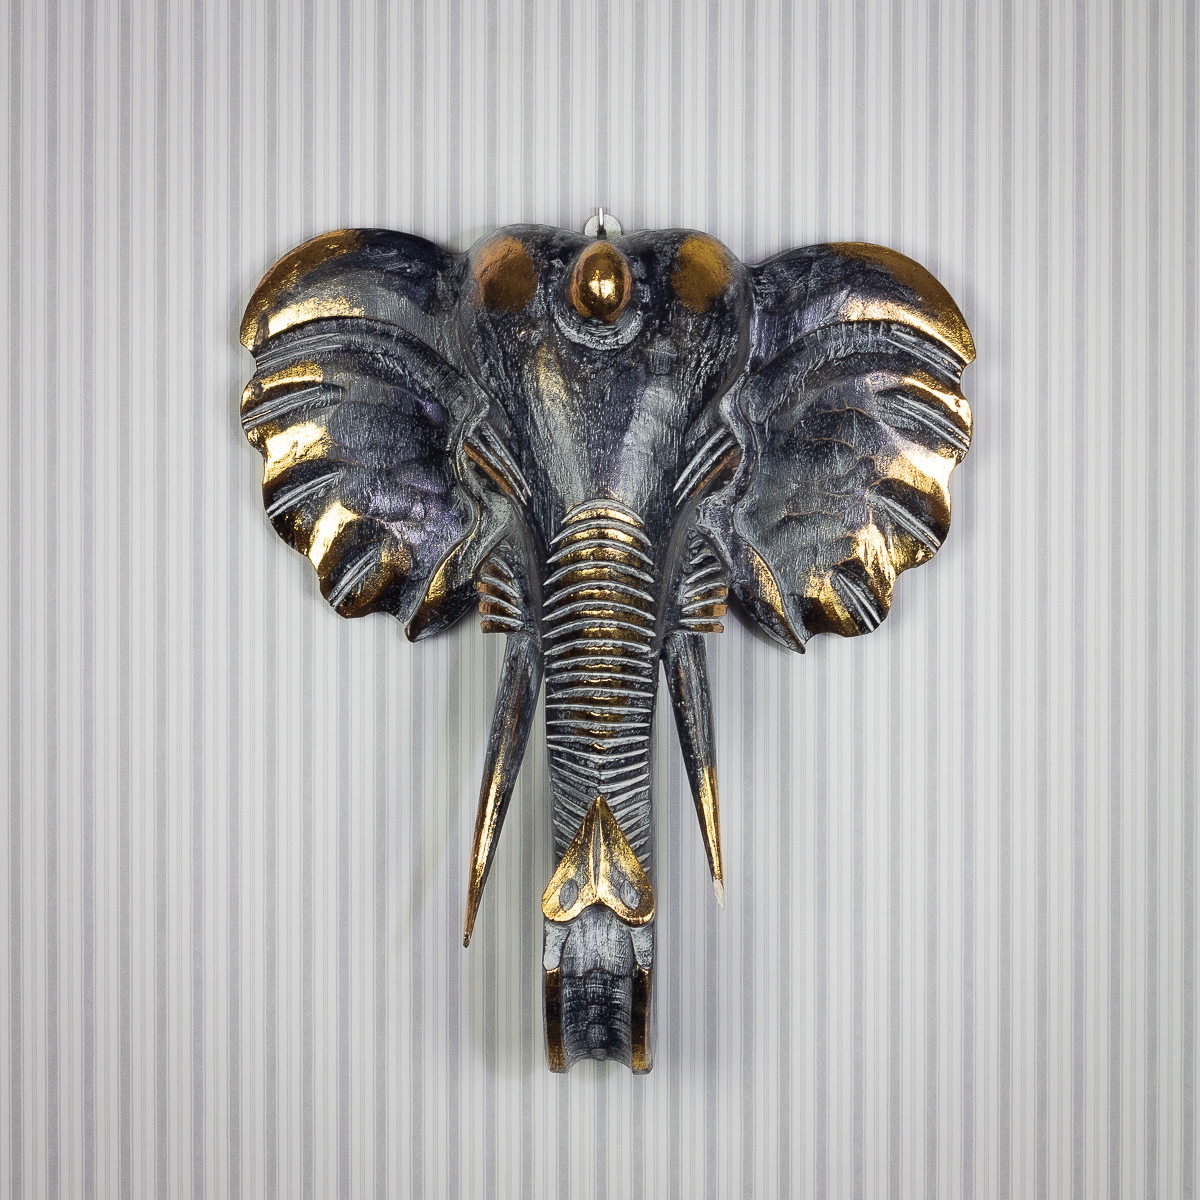 Figura decorativa de madera tallada Elefante decorativo